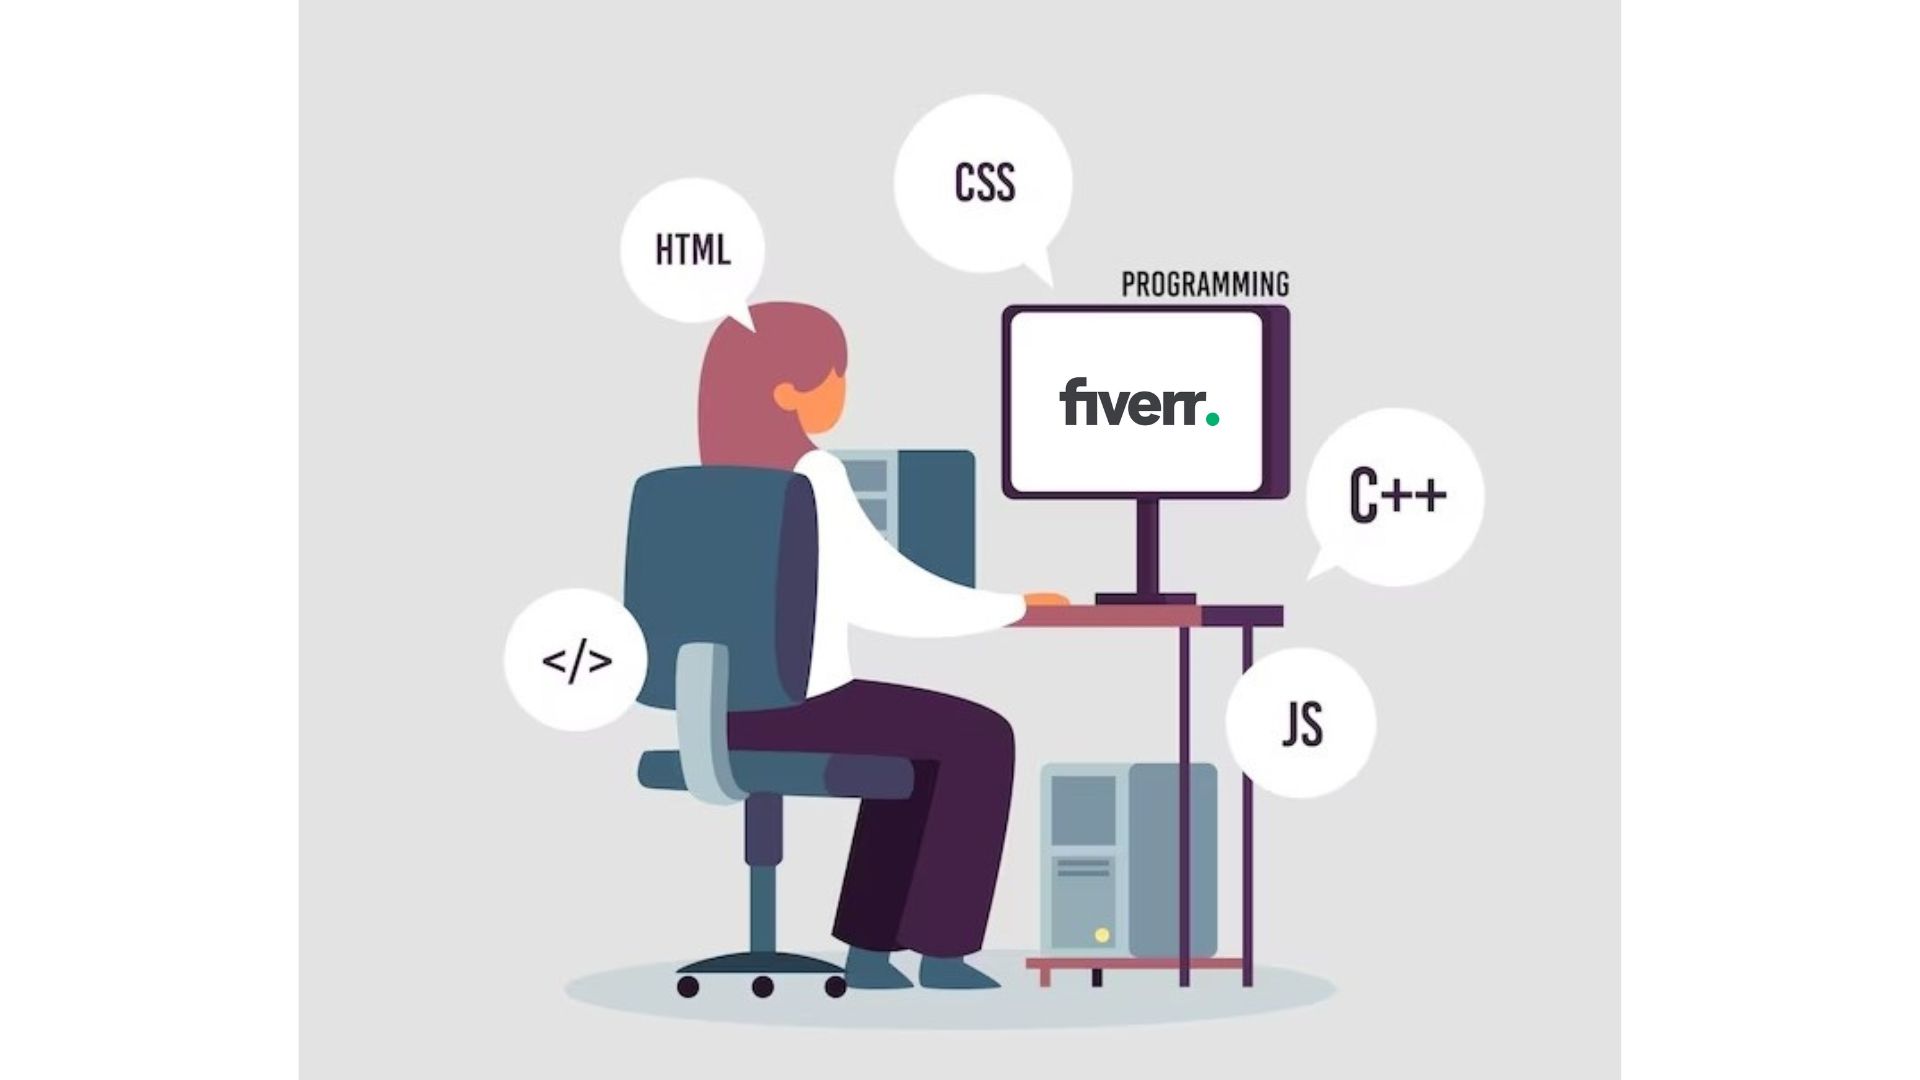 Is Fiverr good for web development